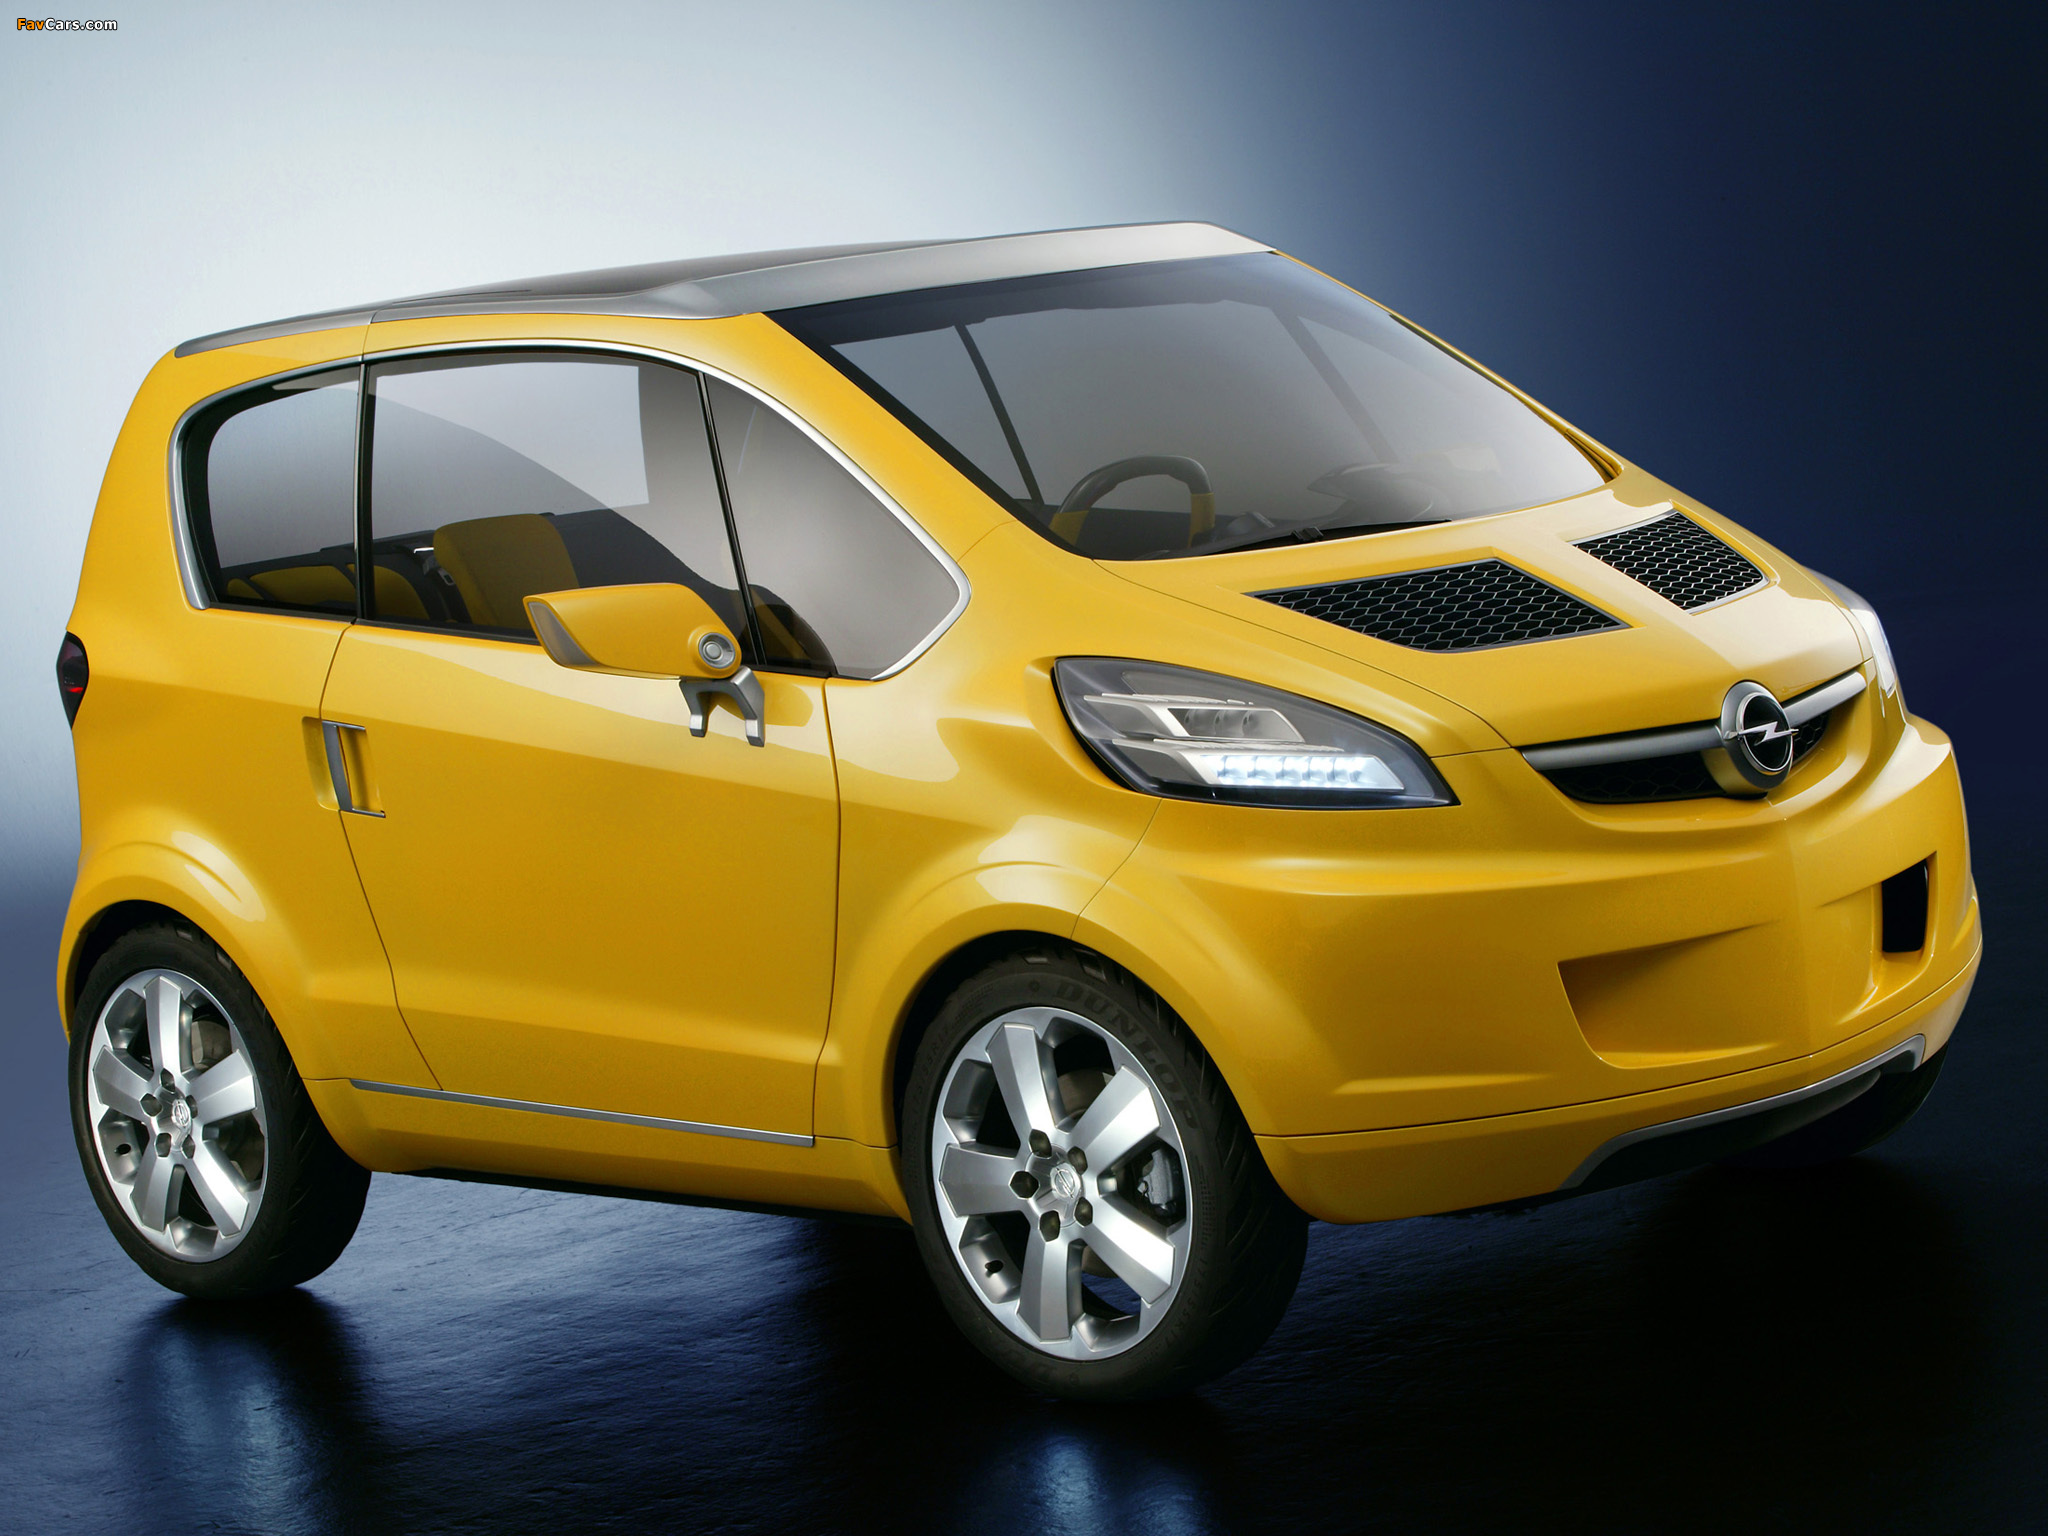 Микро стал. Opel Trixx. Byvin bd132j. Форд малолитражка. Opel Mini.